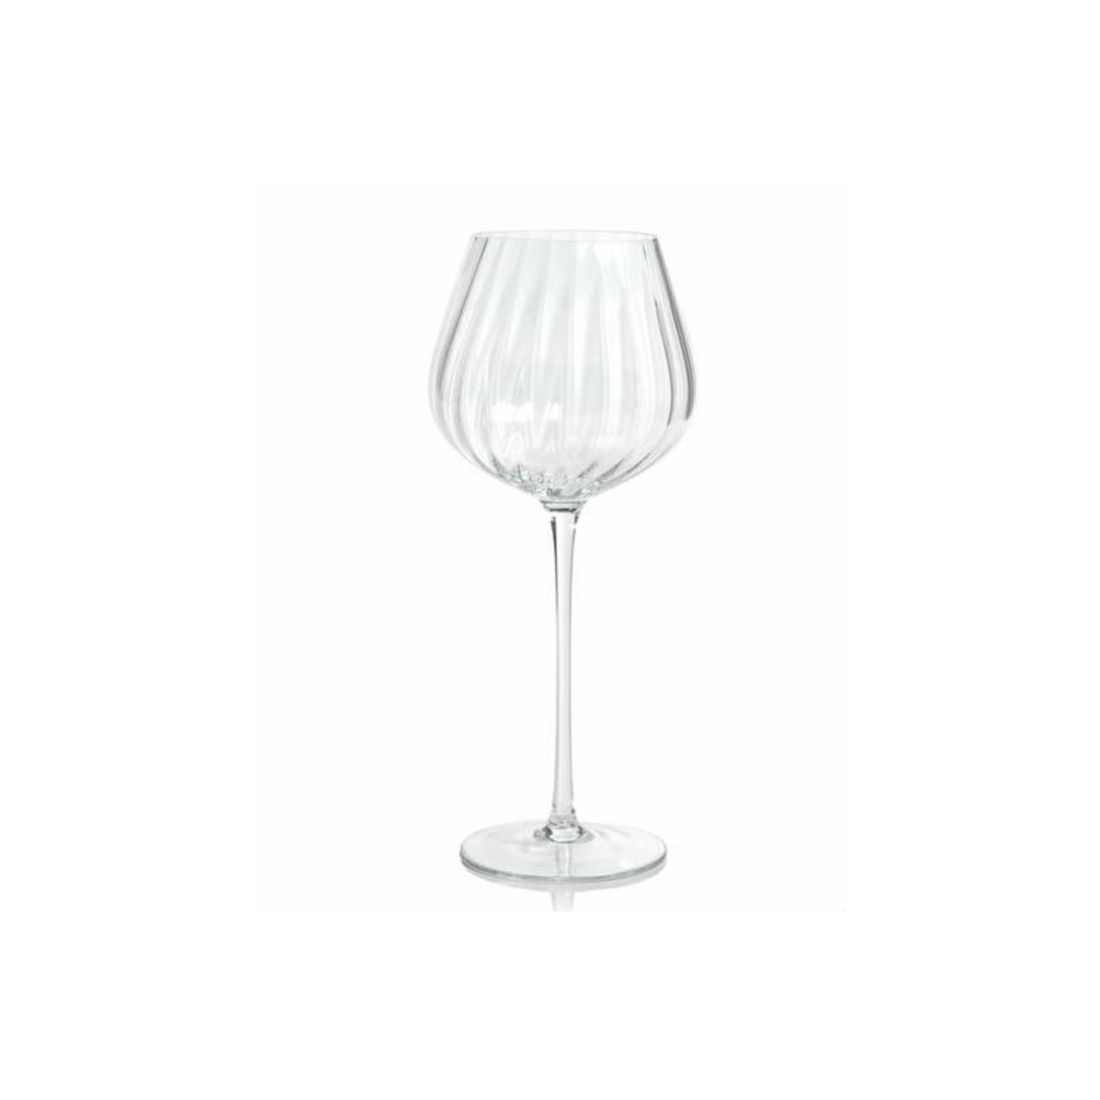 Toile Wine Glasses